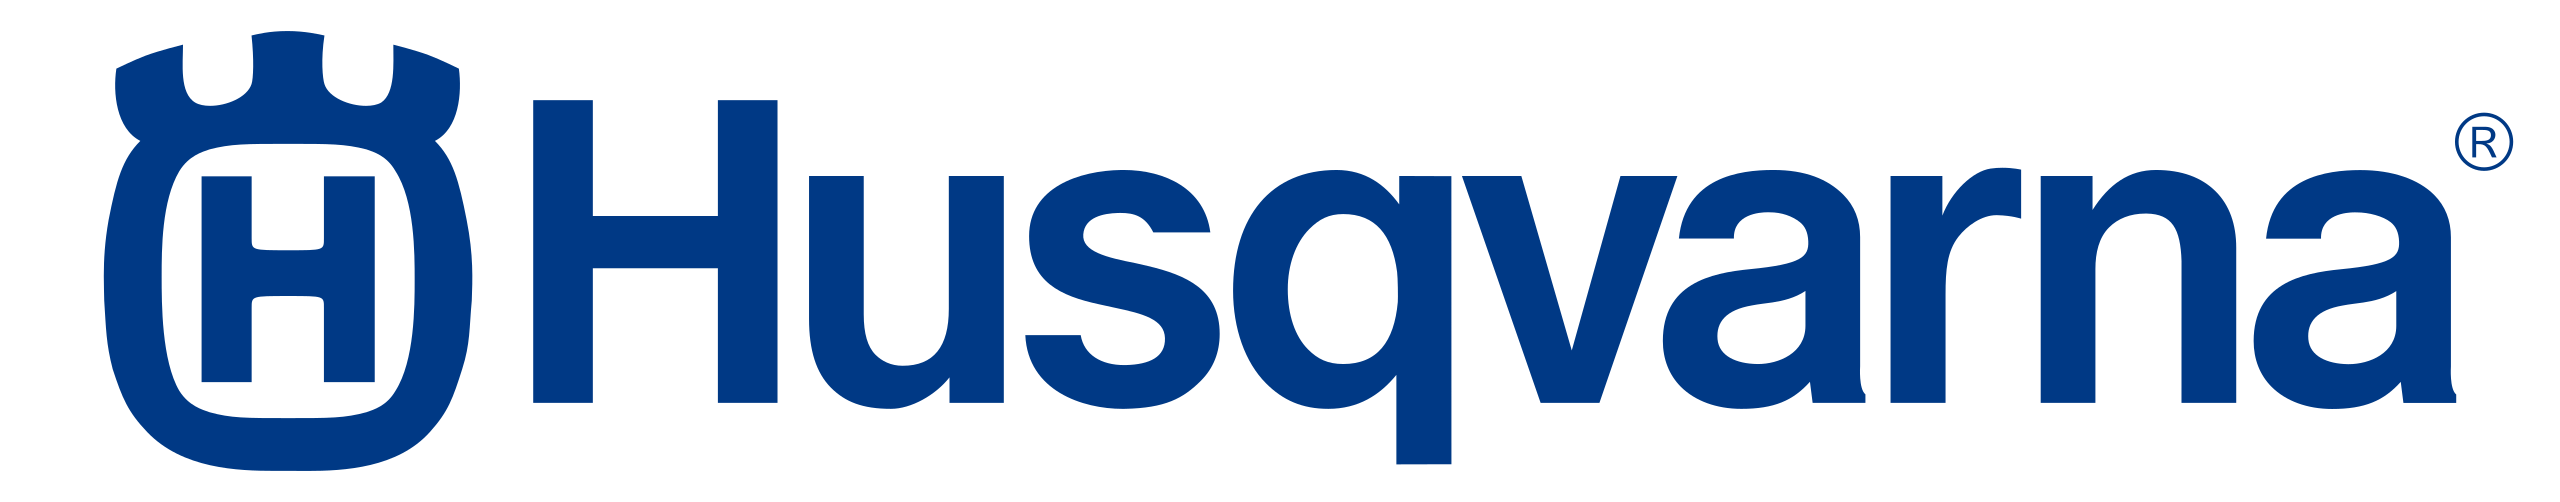 husq logo